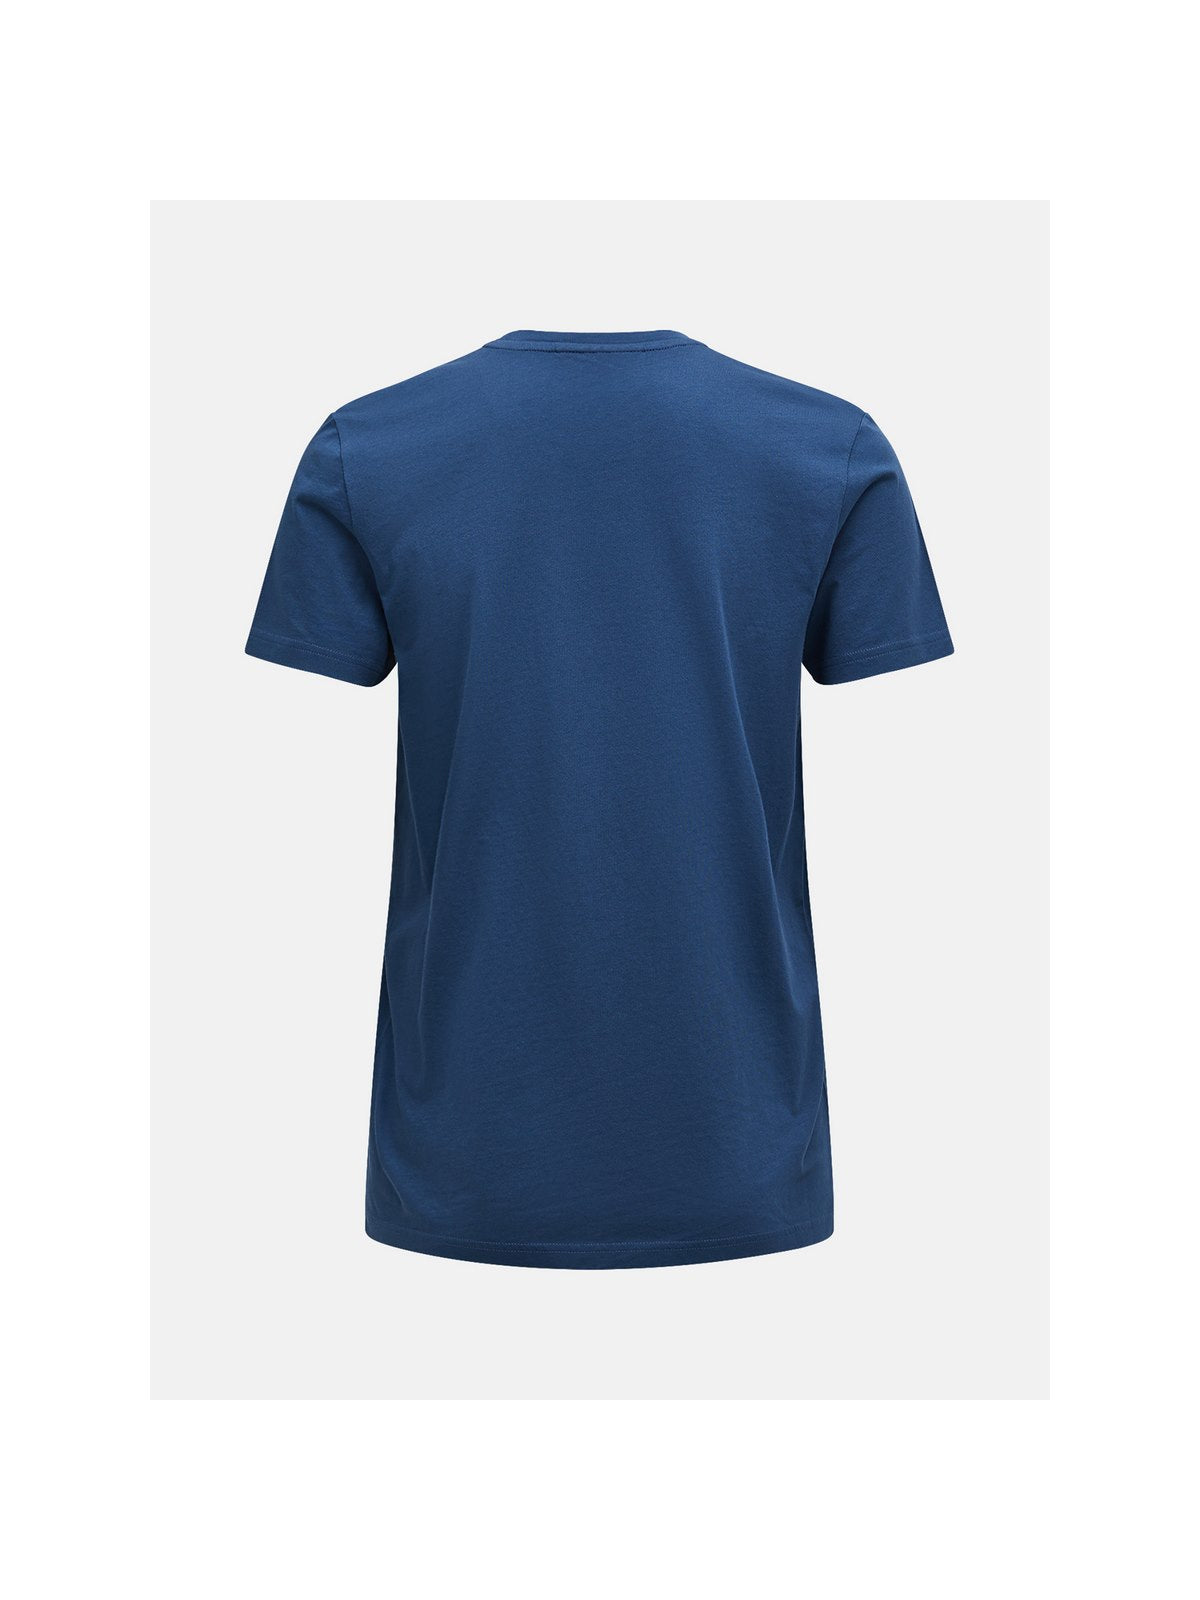 T-Shirt Peak Performance M Original Tee niebieski